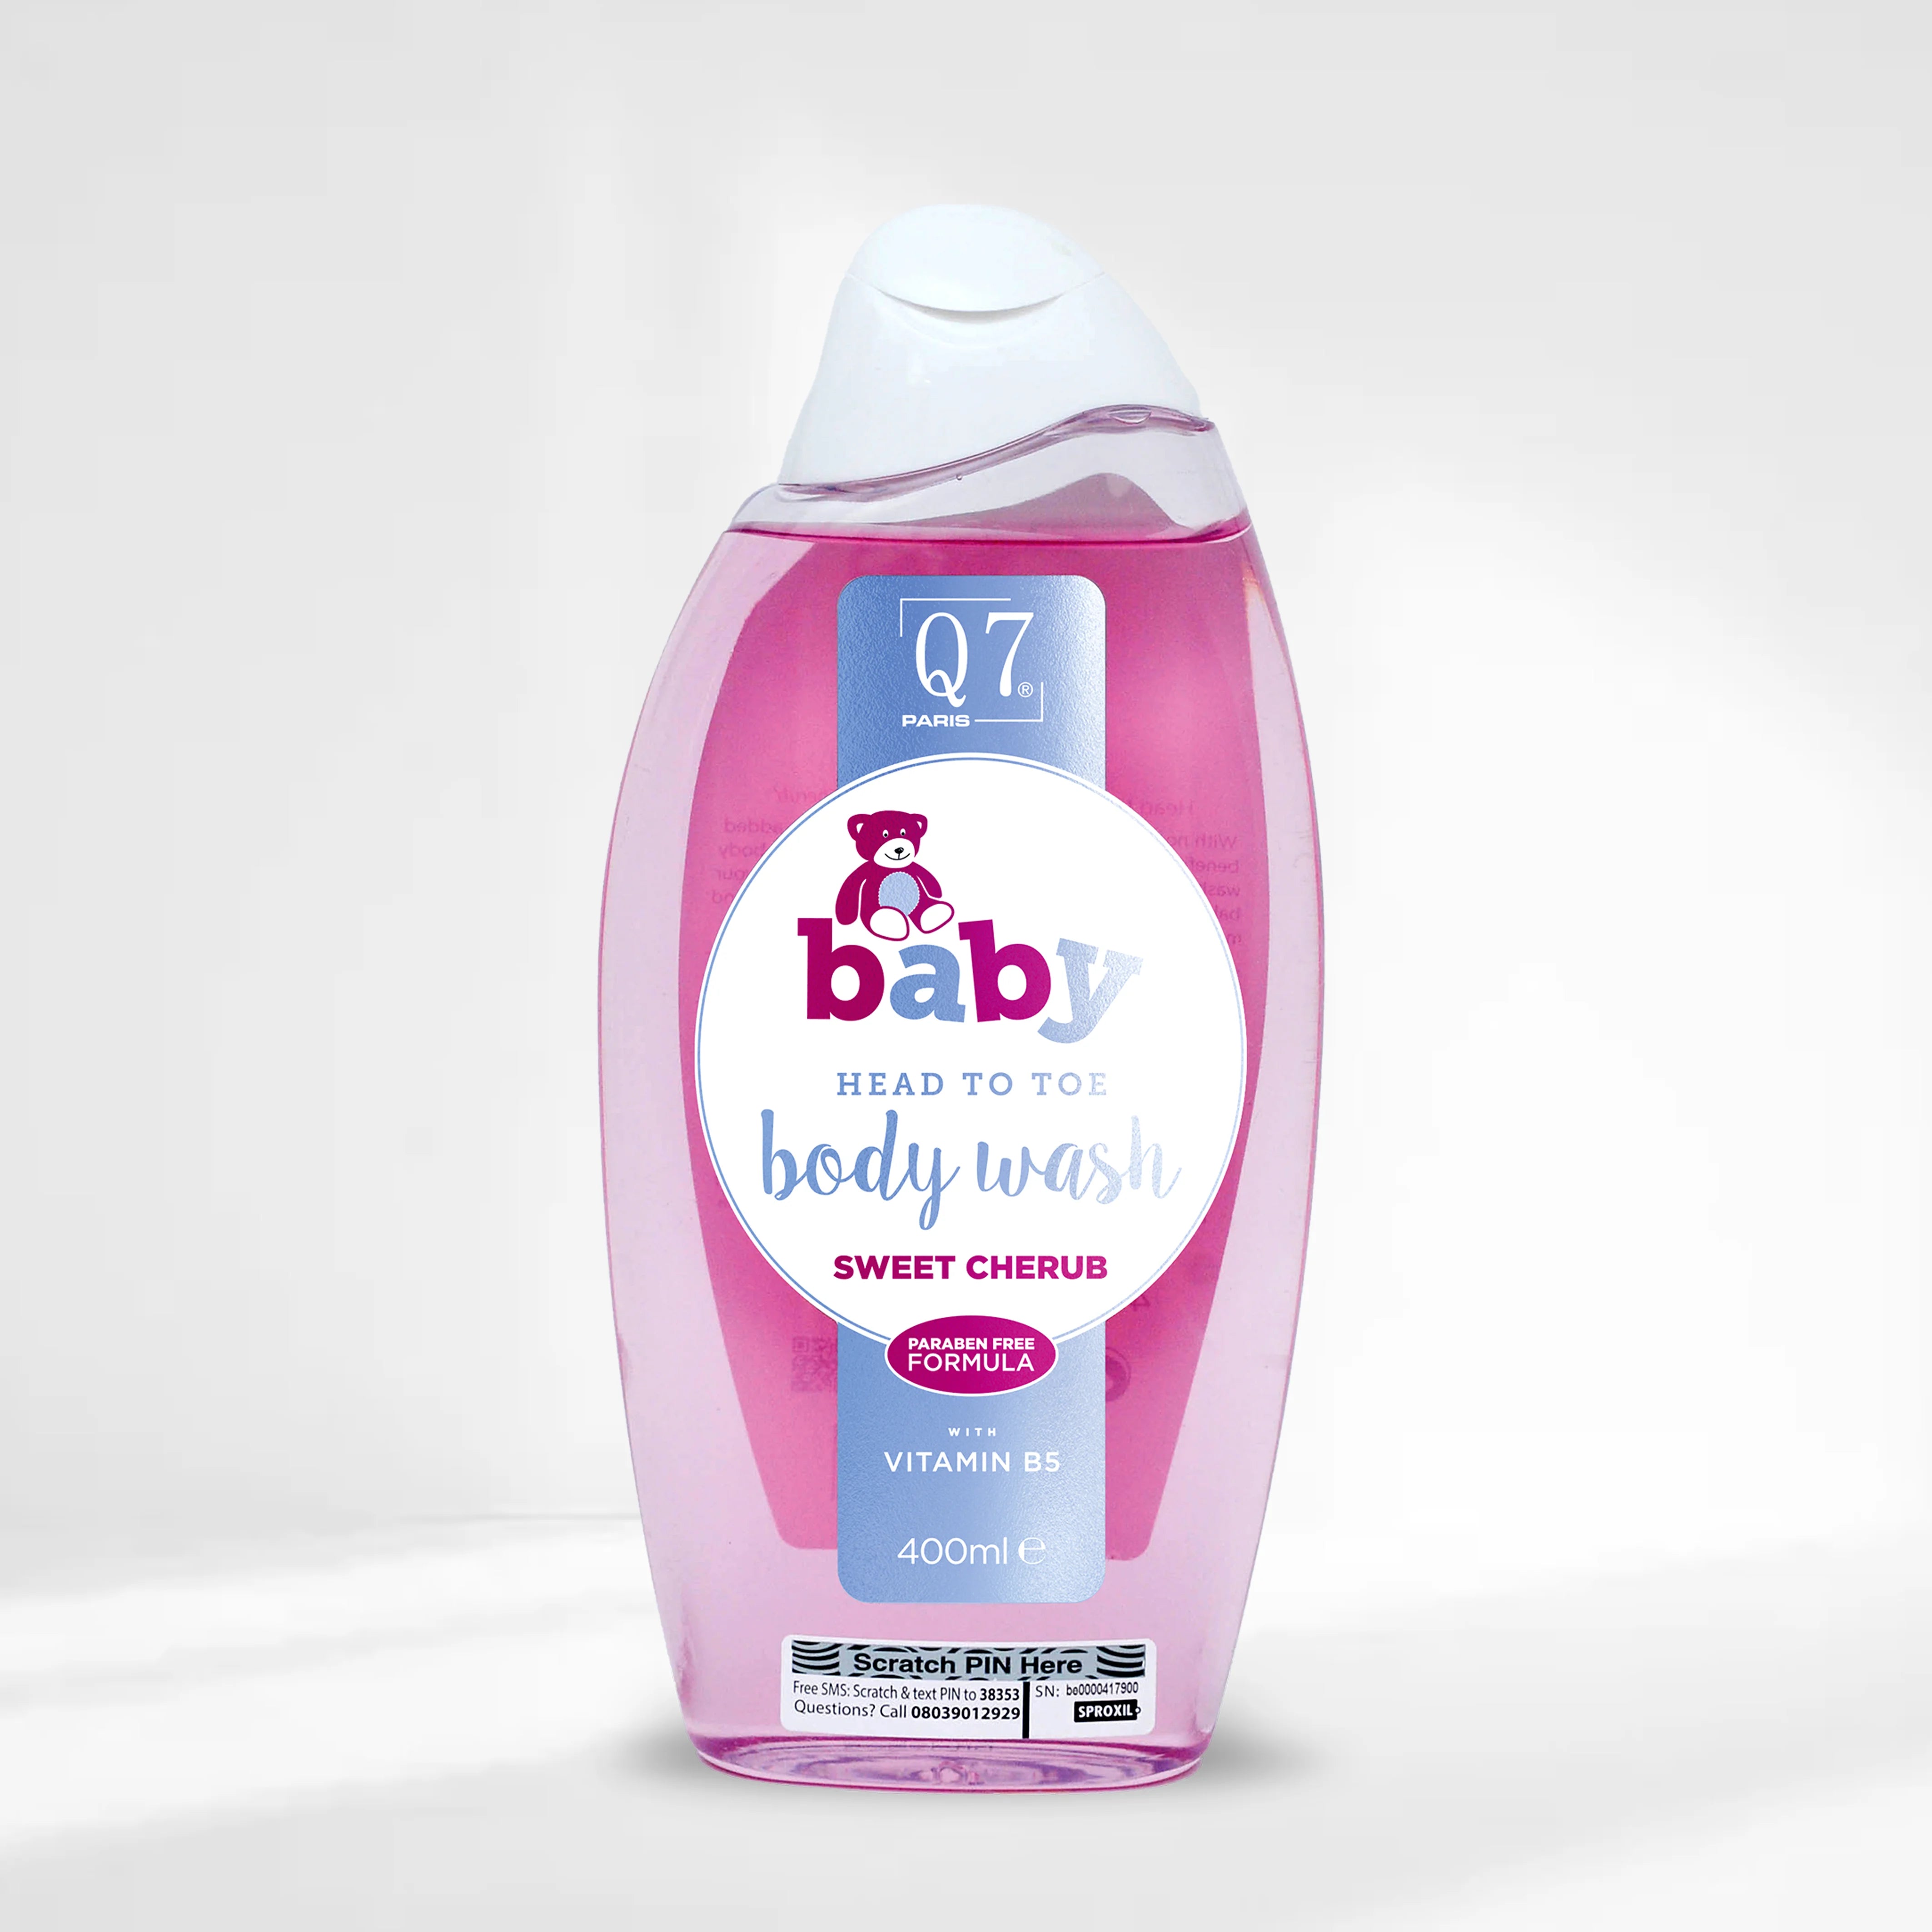 Q7-Baby Head To Toe Bodywash ('Sweet Cherub'): with Vitamin B5 - 400ml